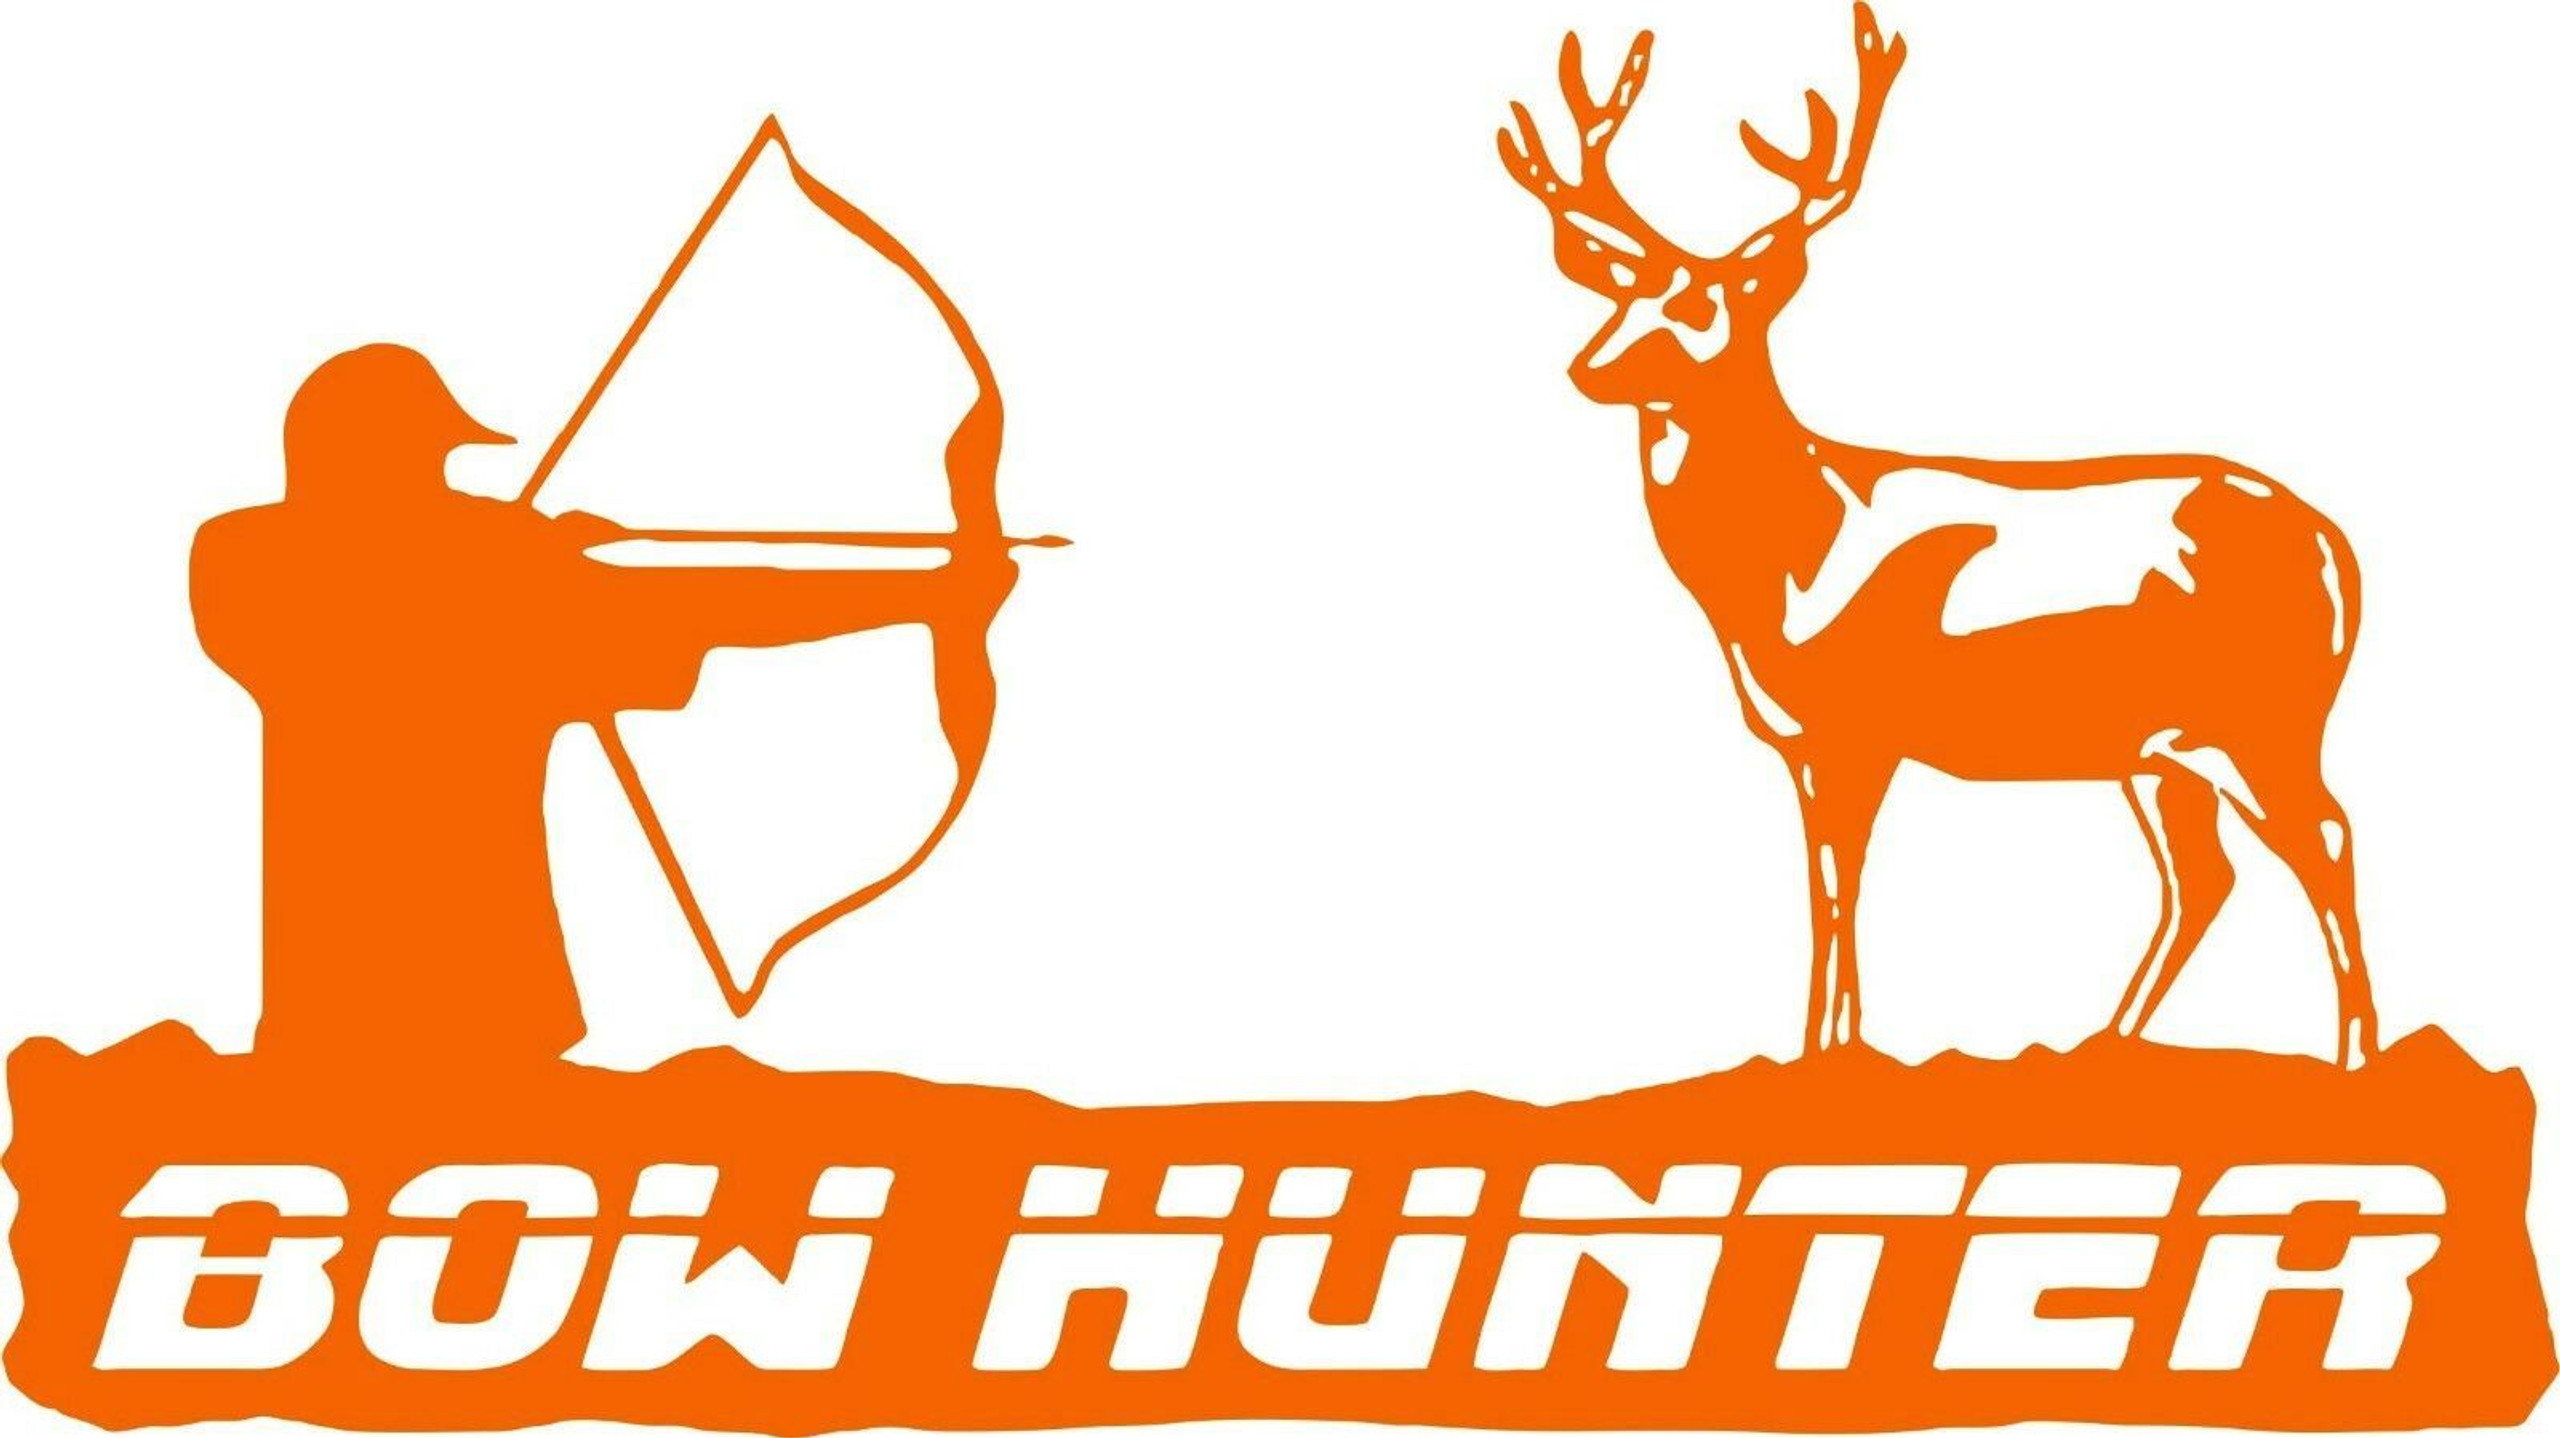 Bow Hunter Deer Archery Hunting Car Truck Window Laptop Vinyl Decal Sticker 6493